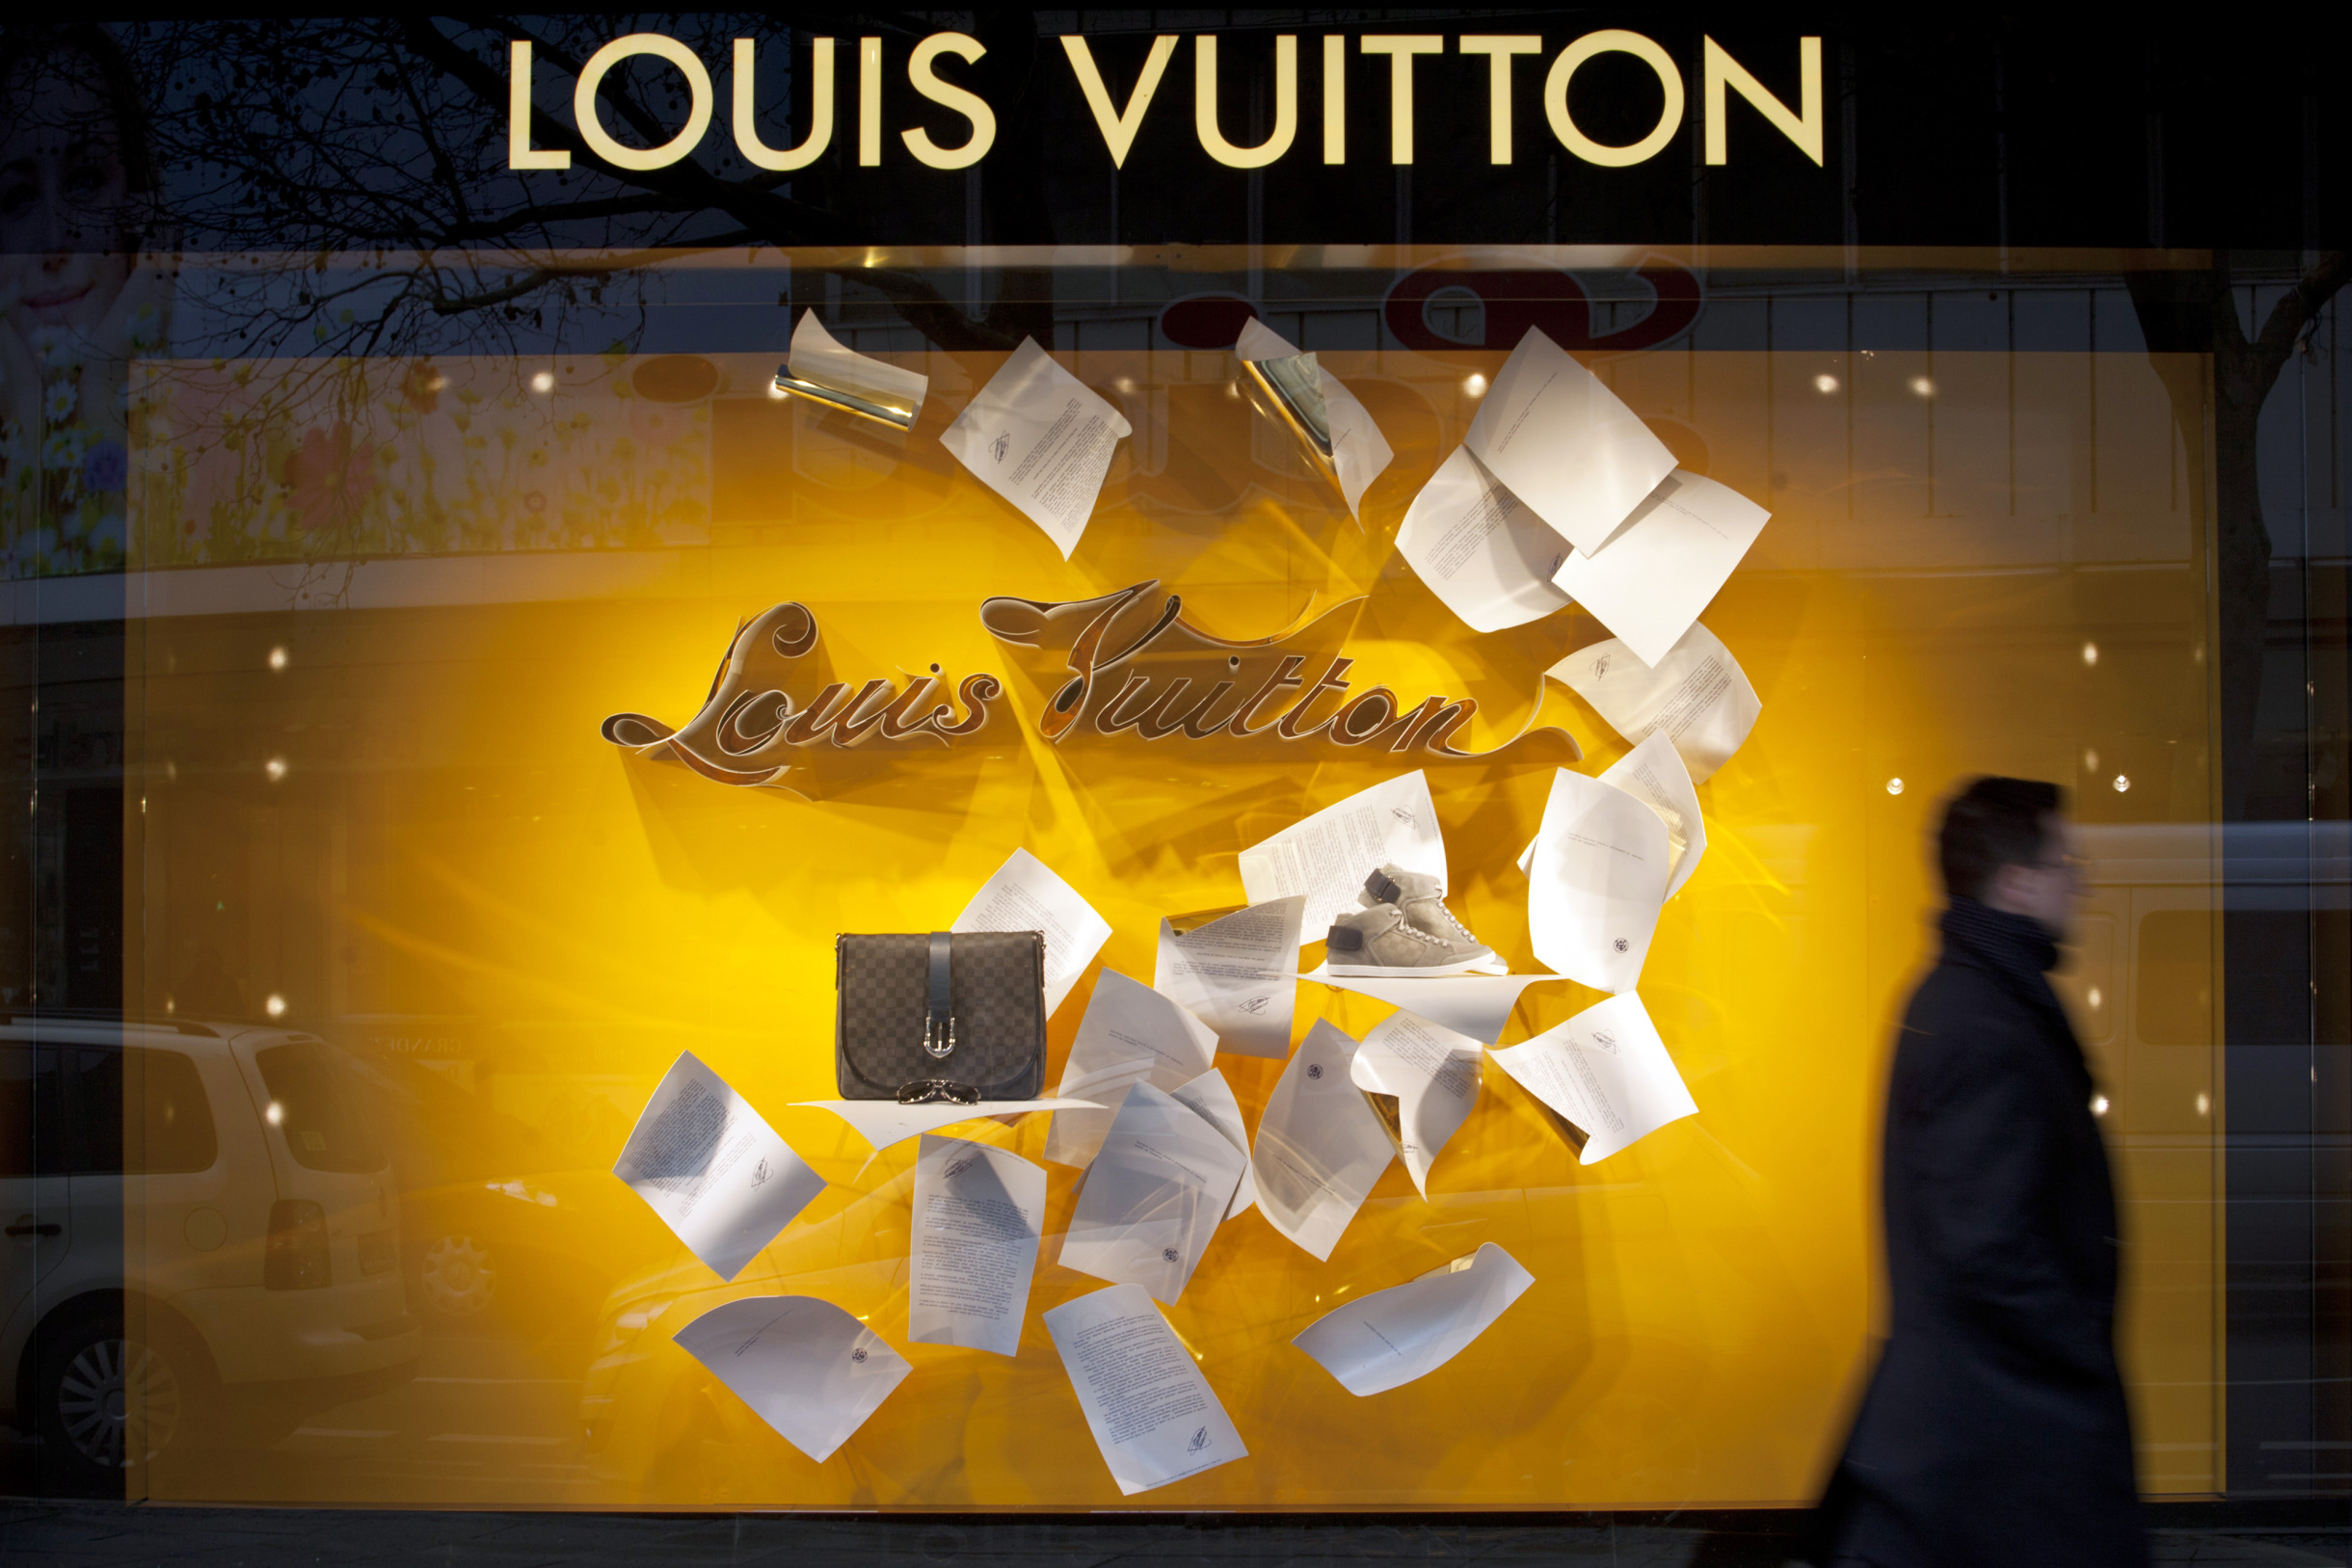 Gaston Louis Vuitton Death  Natural Resource Department